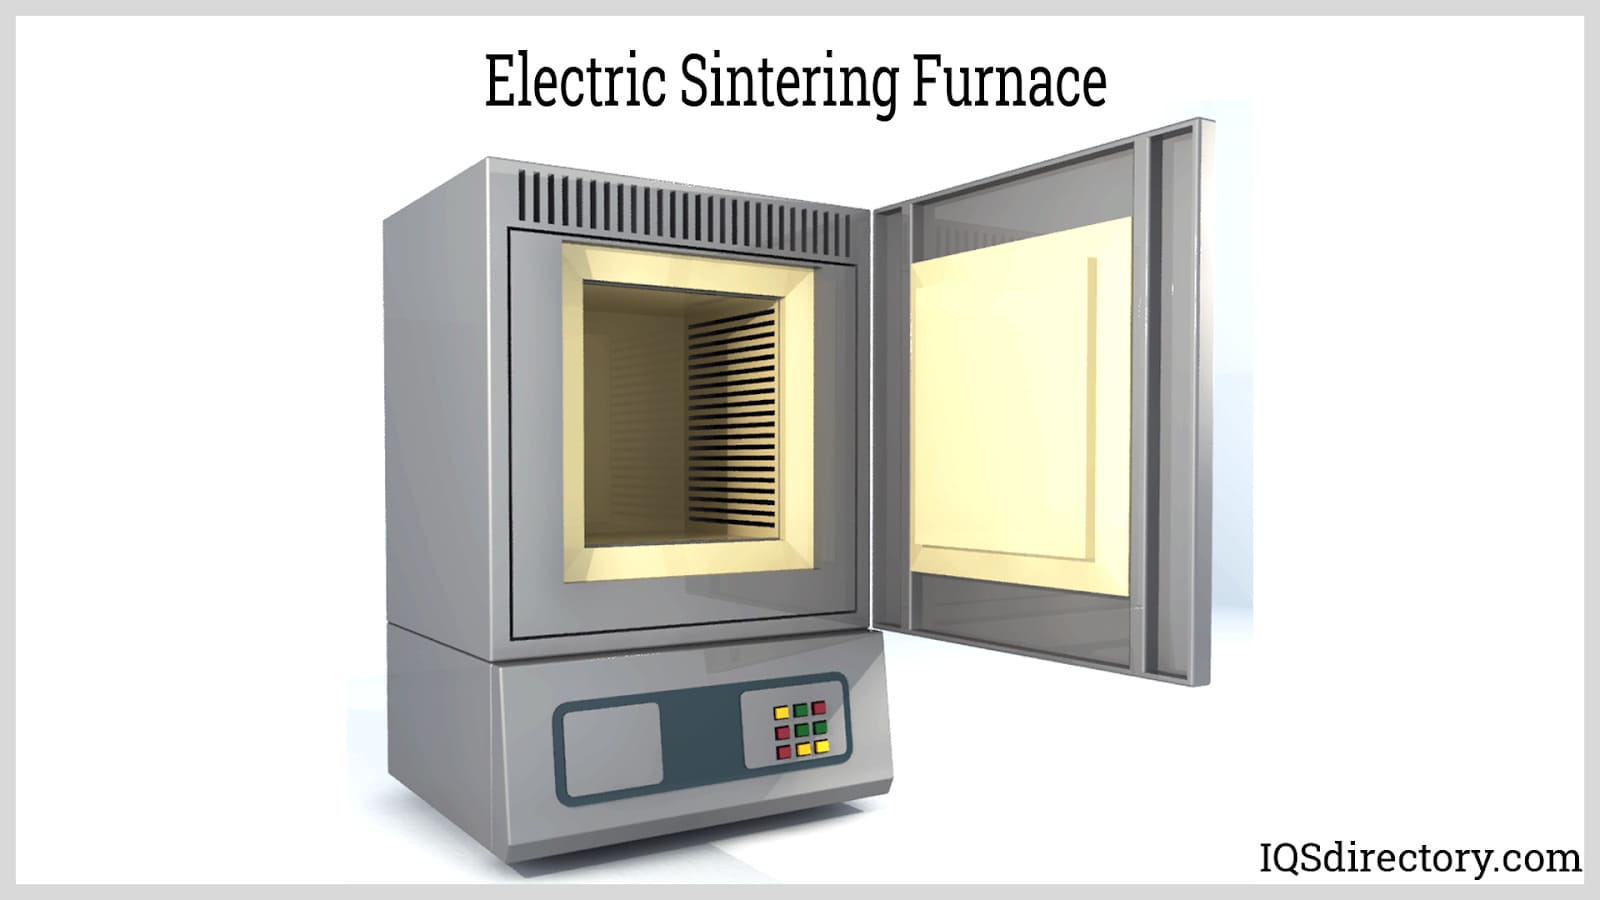 Electric Sintering Furnace